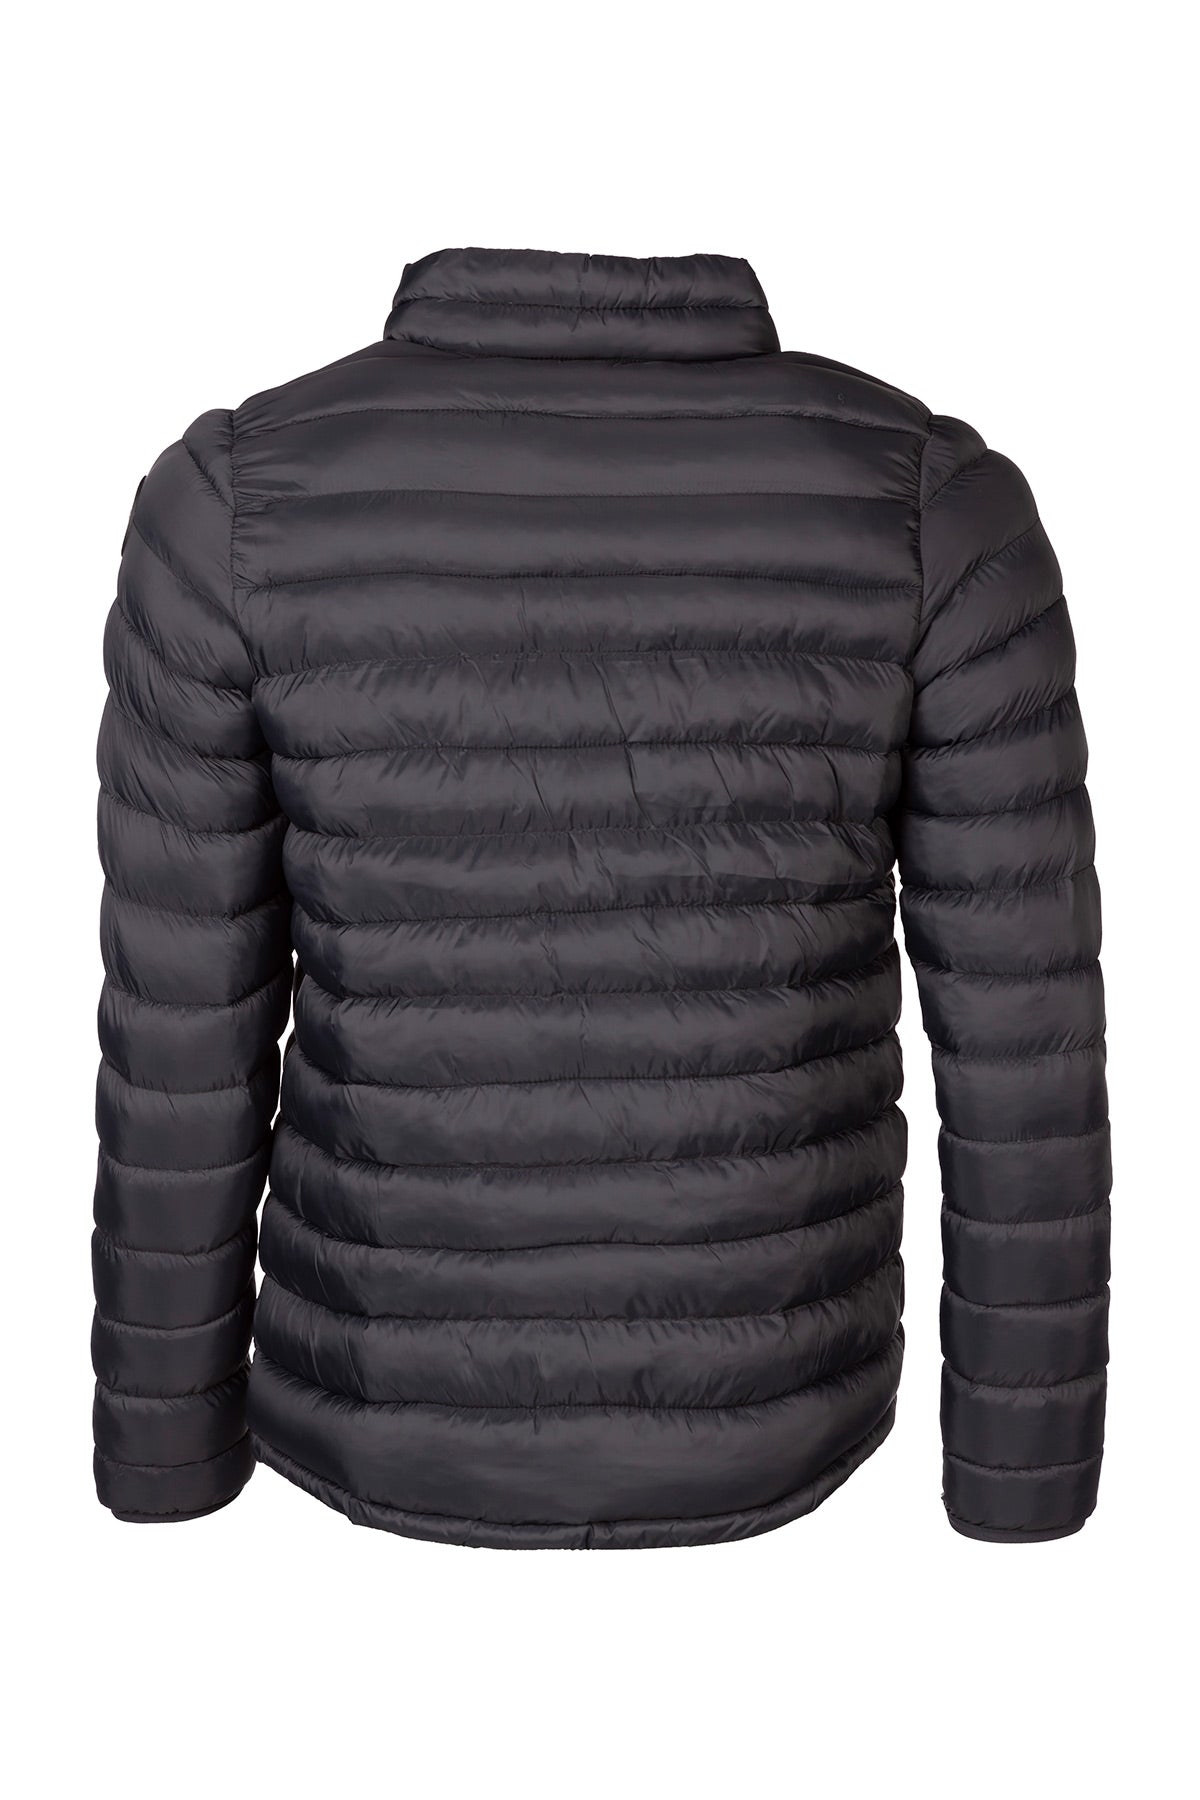 Men's Lightweight Insulated Jacket UK | Rydale